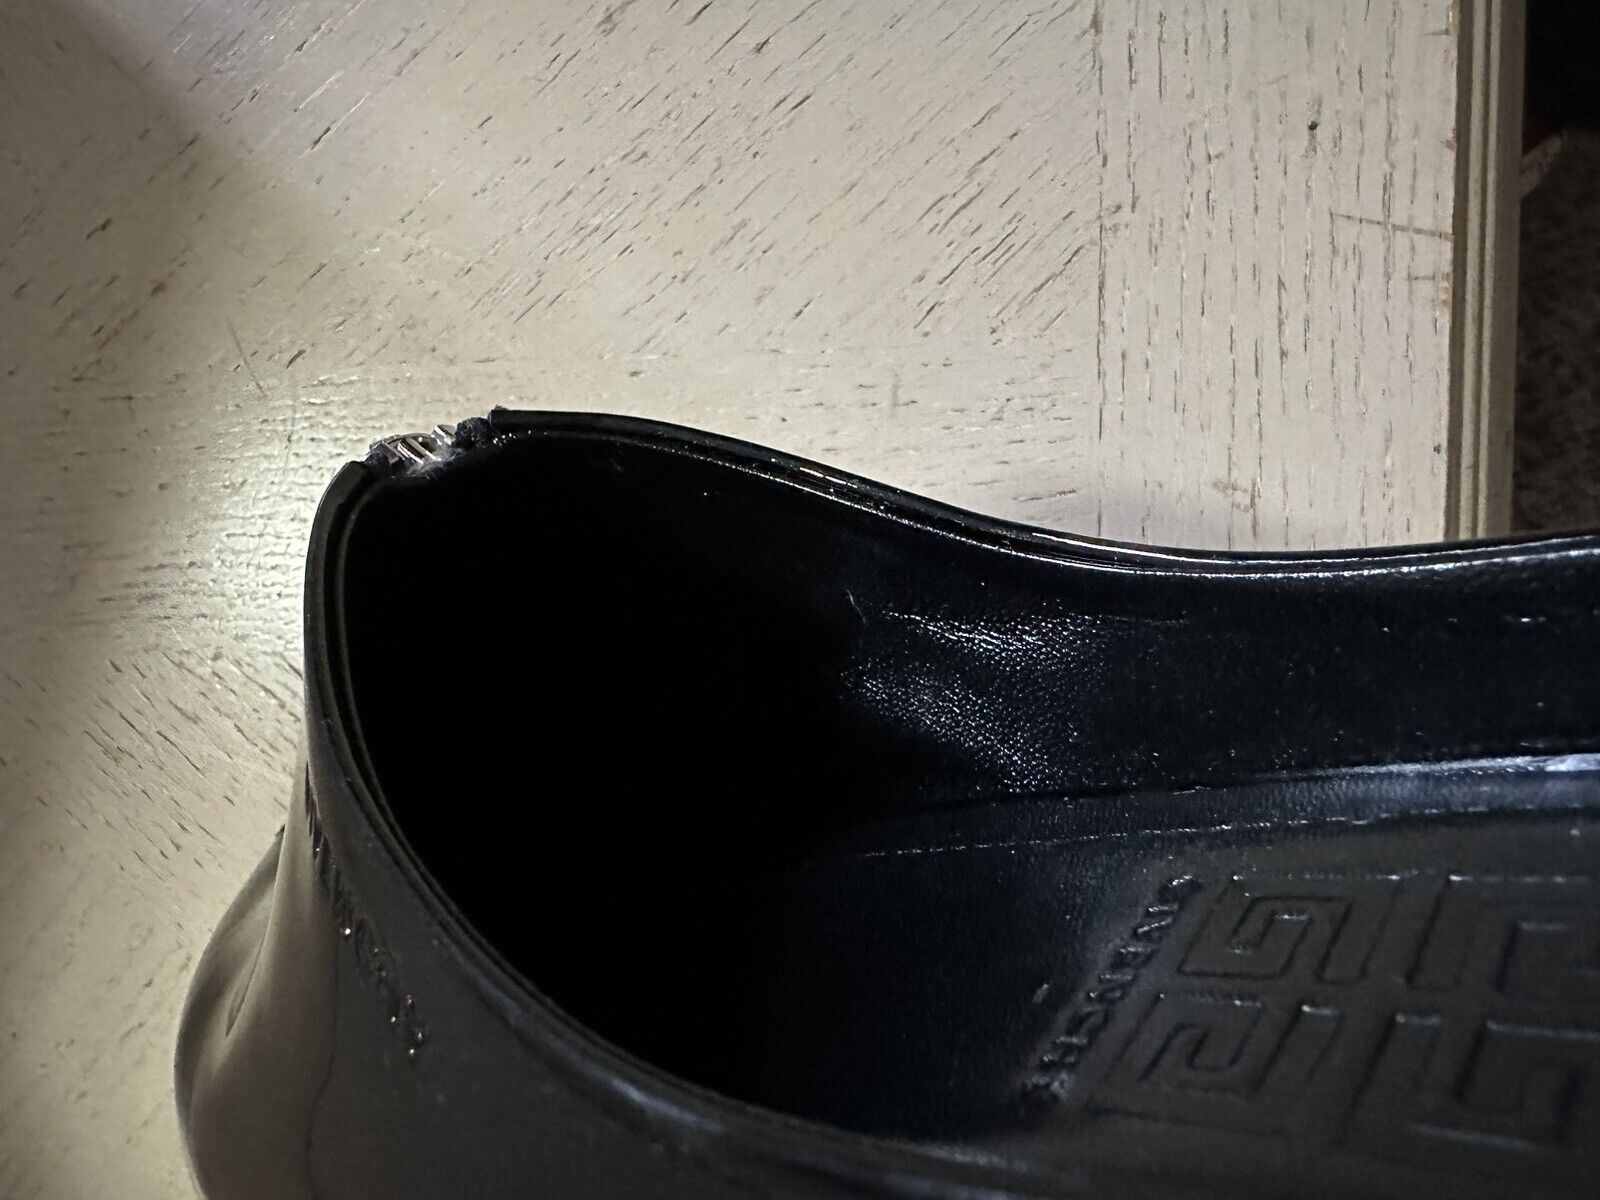 NIB $1150 Givenchy Women G Patent Zip-Up Mule Clogs Shoes Black 9 US/39 Eu Italy